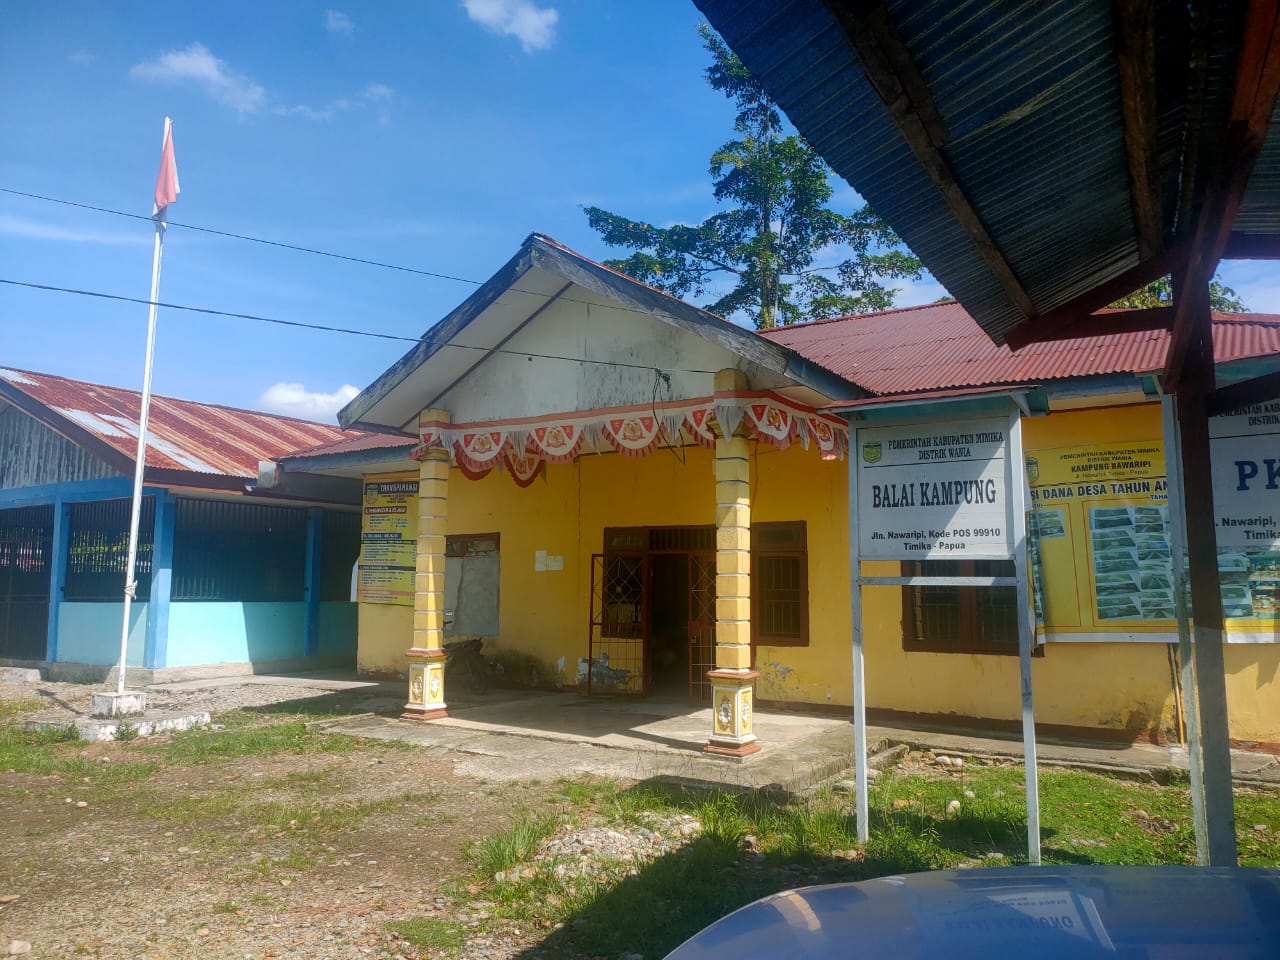 Balai Kampung Nawaripi